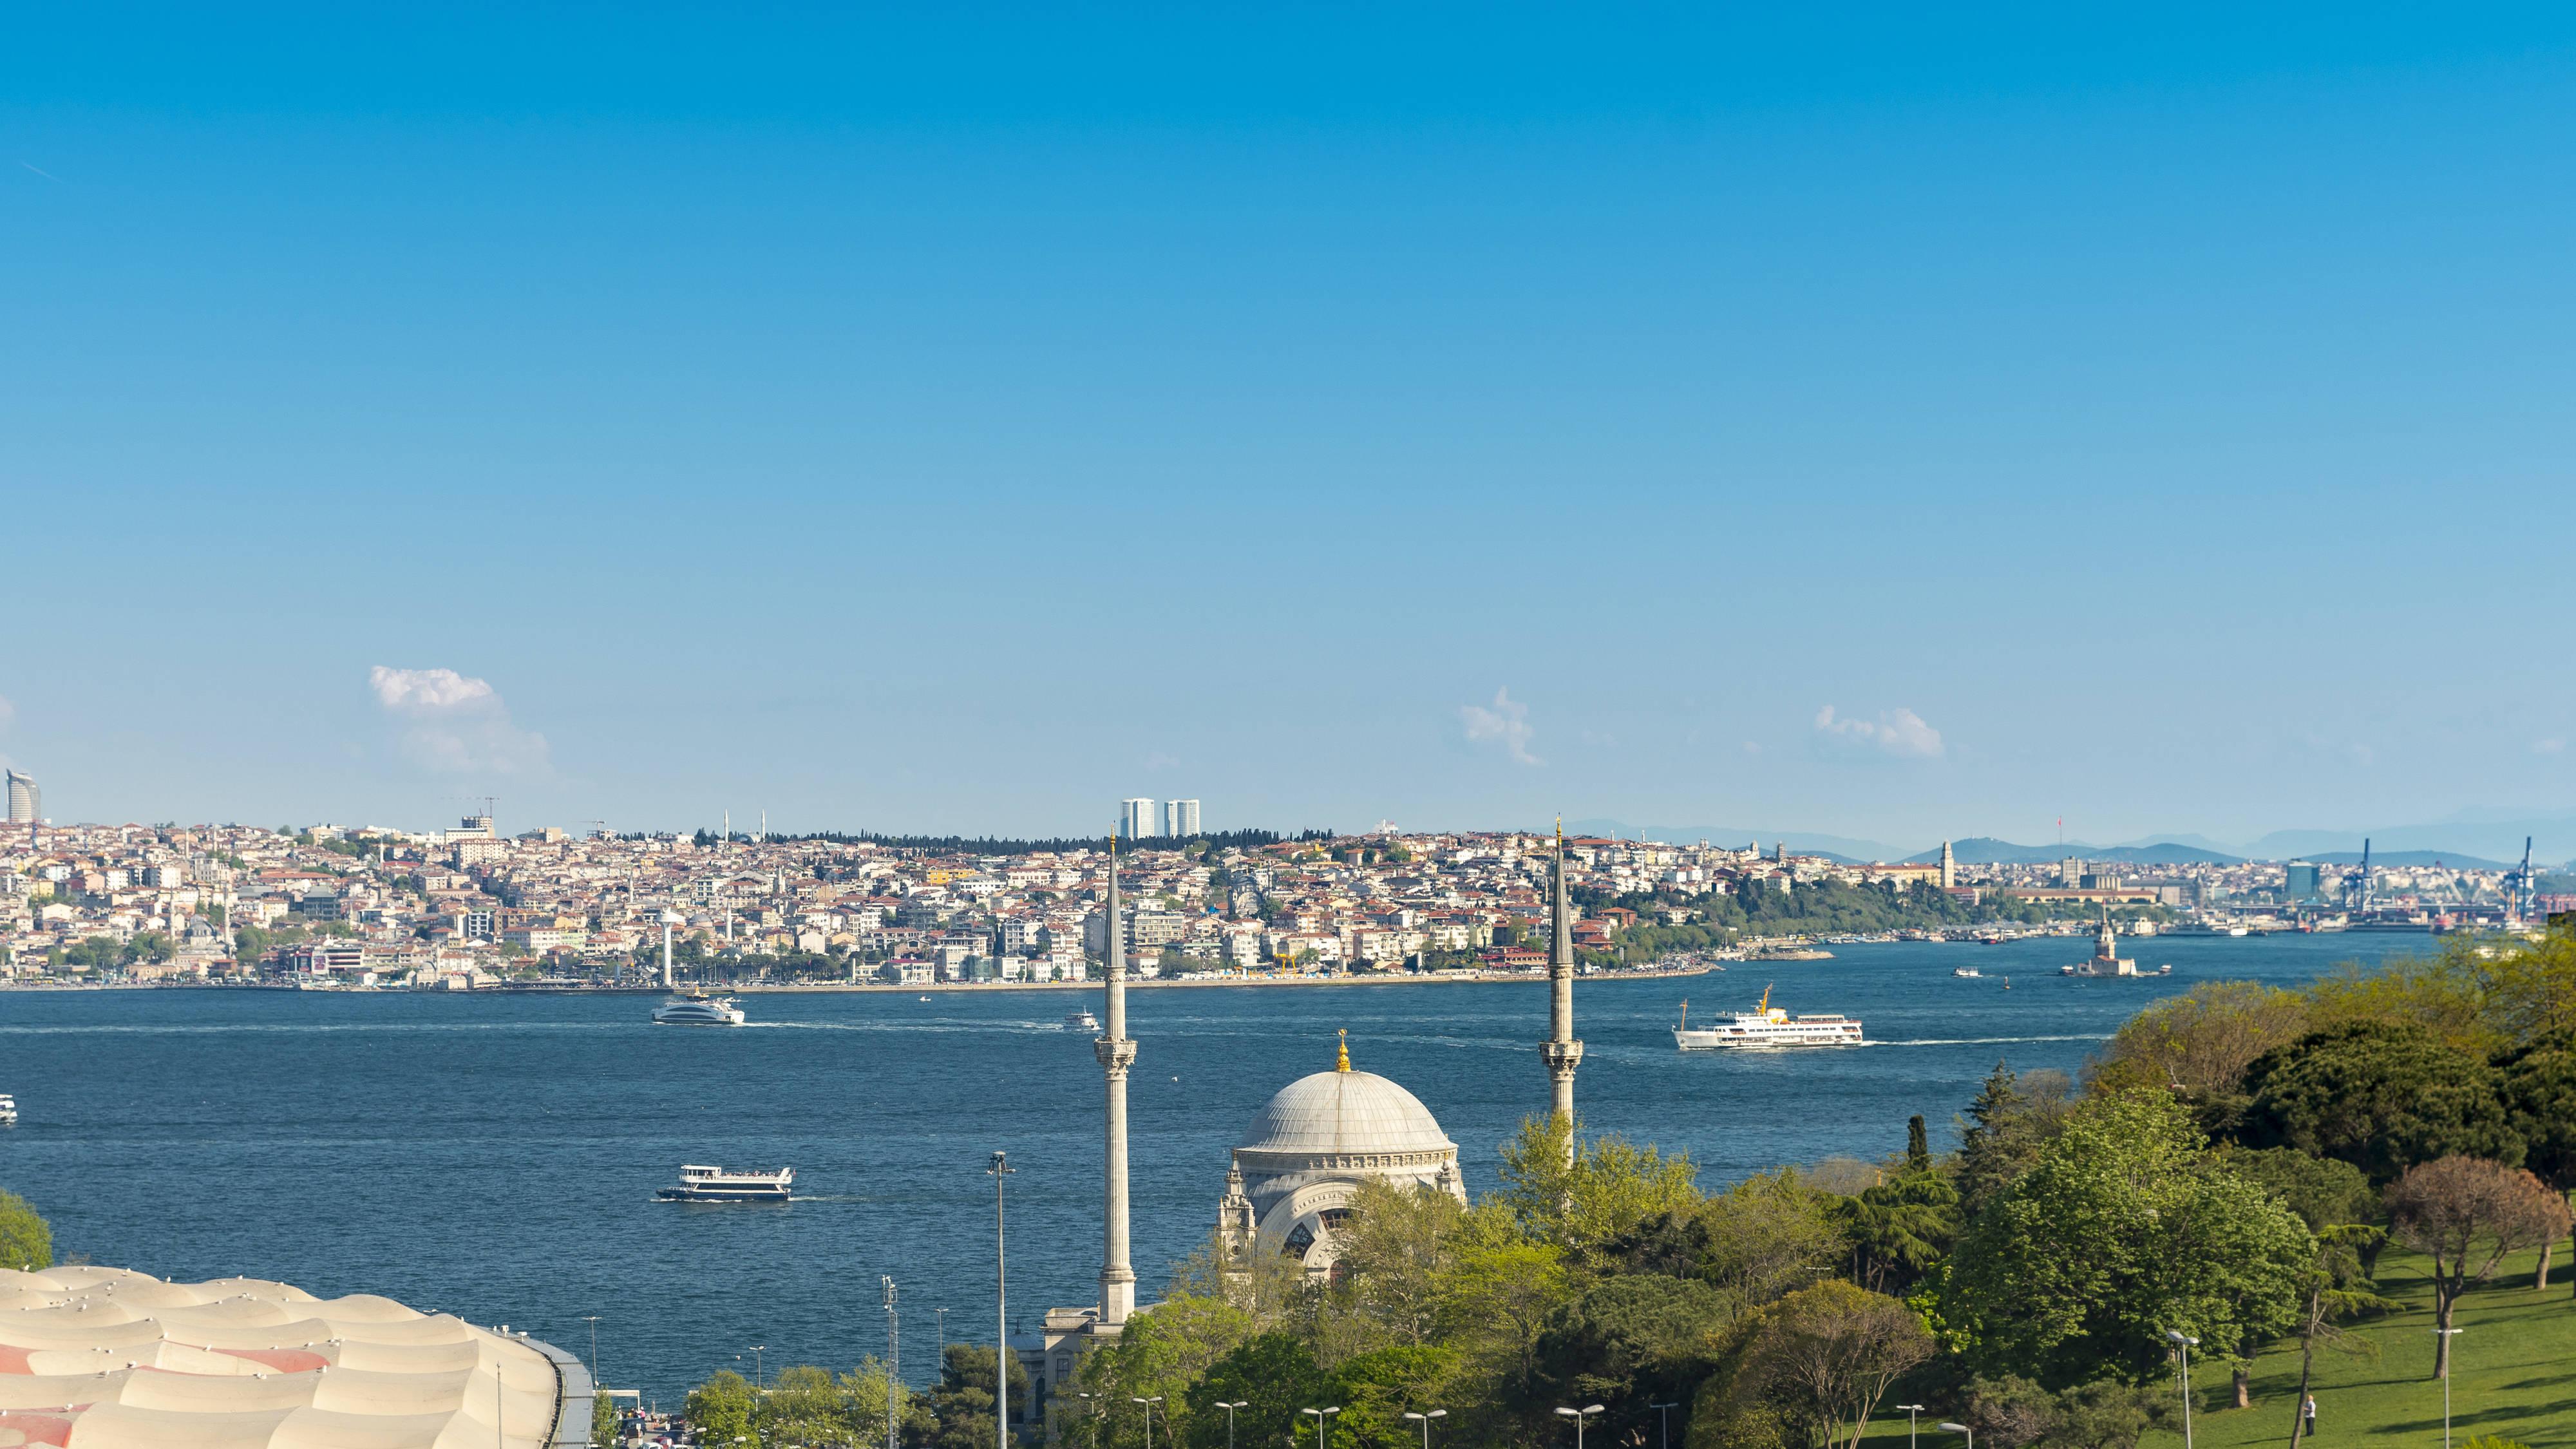 The Ritz-Carlton, Istanbul (The Ritz-Carlton, Istanbul at The Bosphorus)